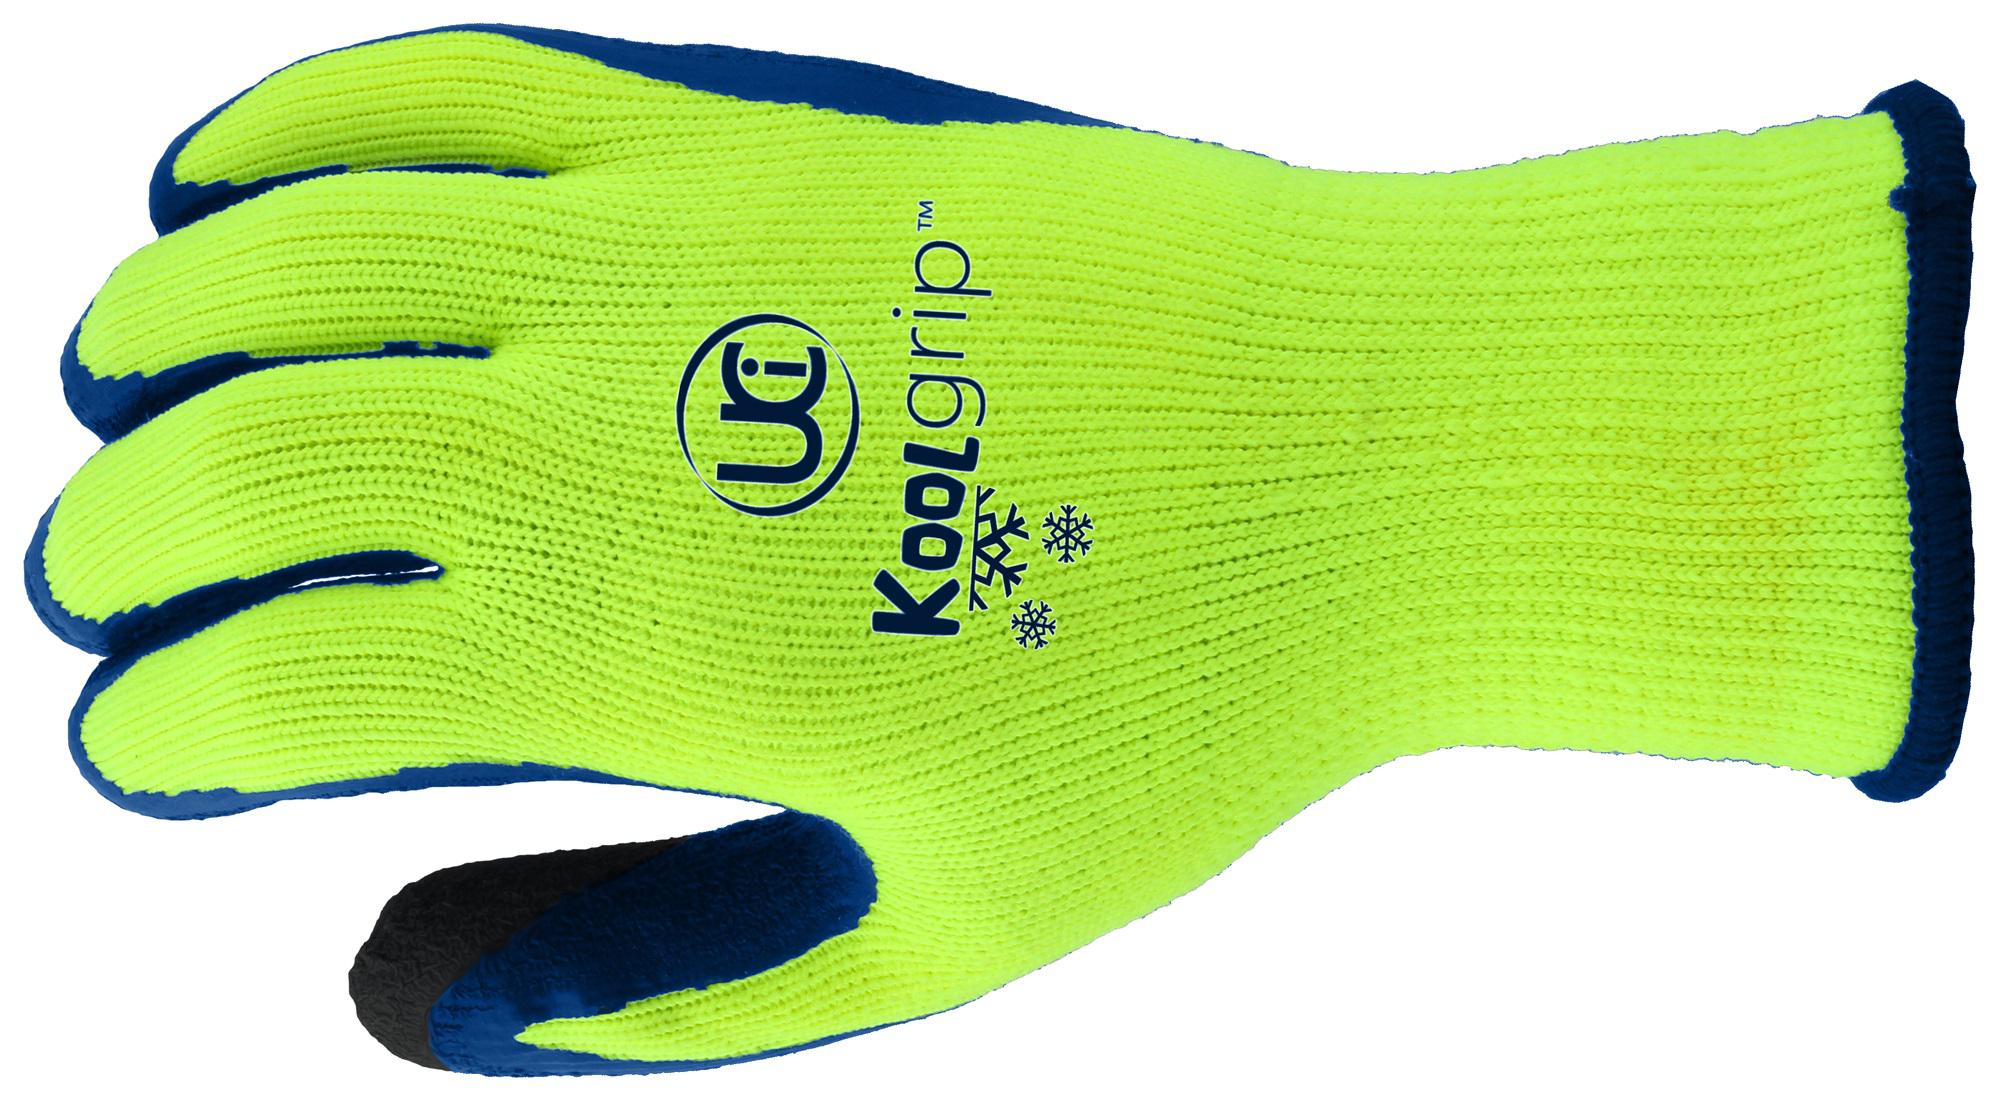 Uci G/koolgrip/ye/09 Thermal Latex Gloves, Pet, Blu/yel, L